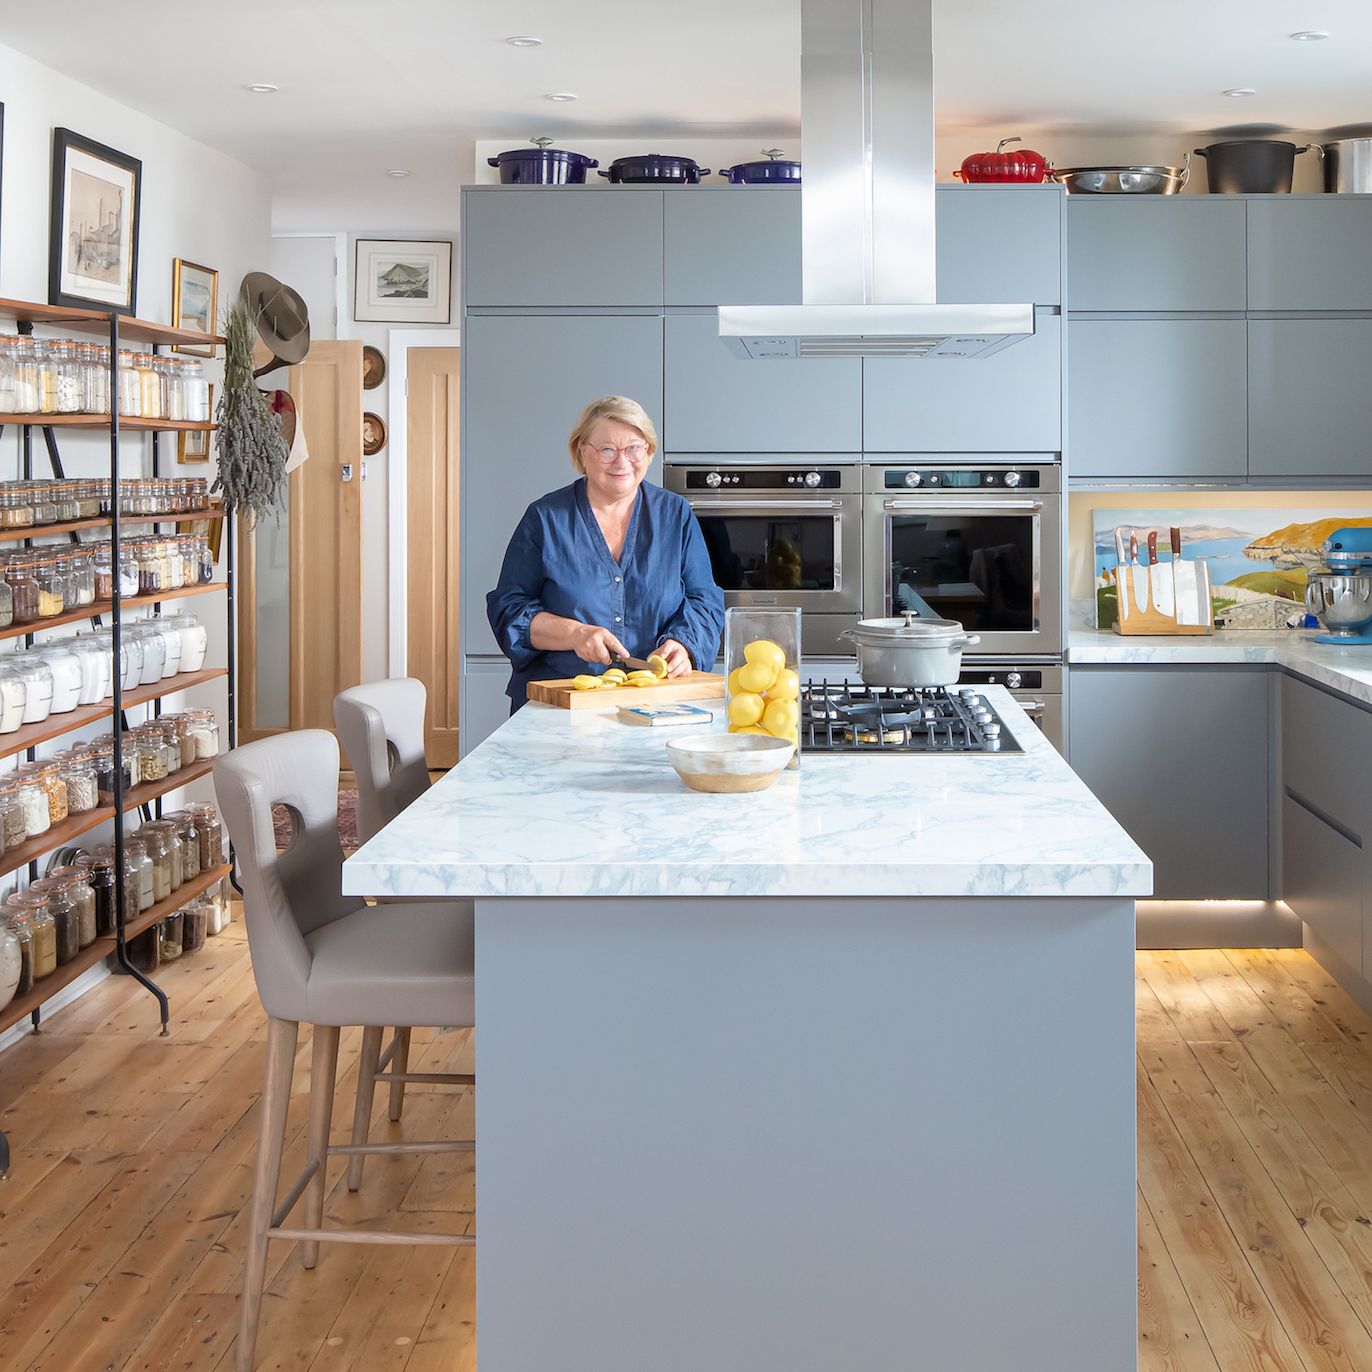 Rosemary Shrager's kitchen transformation